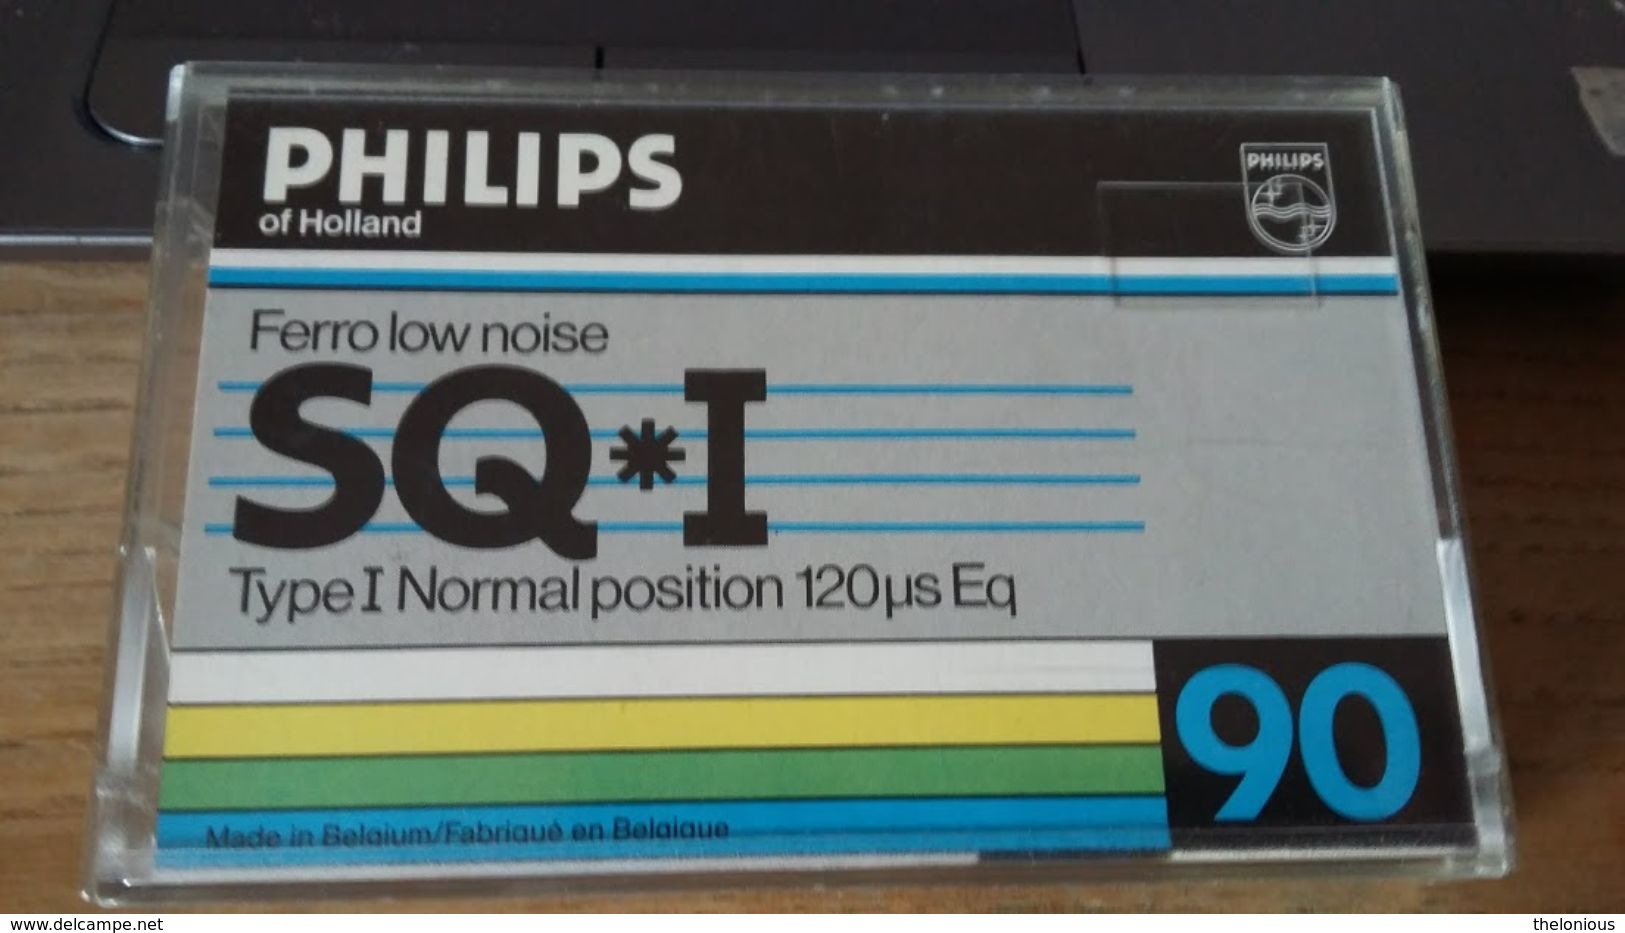 # Audiocassetta PHILIPS SQ I 90 Usata Per Una Sola Registrazione (n.08) - Cassettes Audio